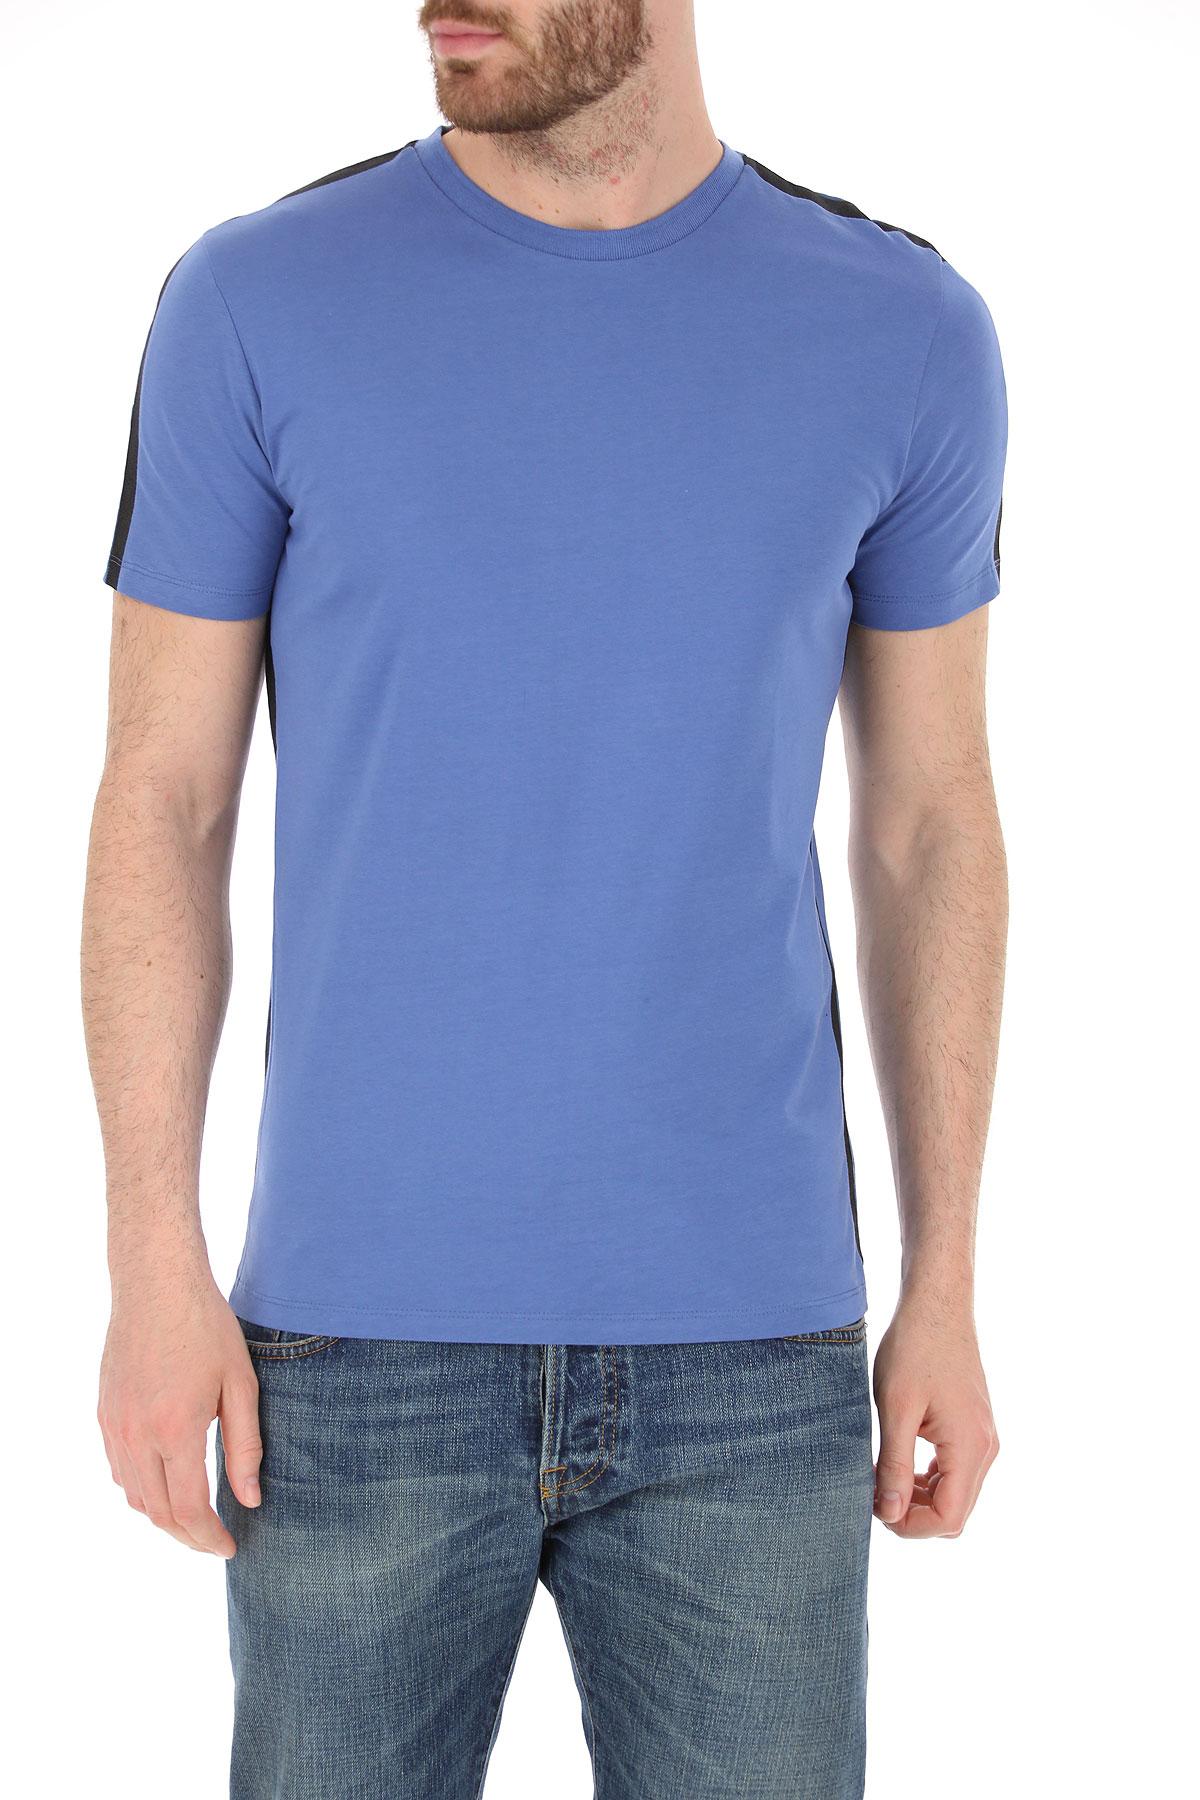 SELECTED T-shirt For Men On Sale in Blue for Men - Lyst